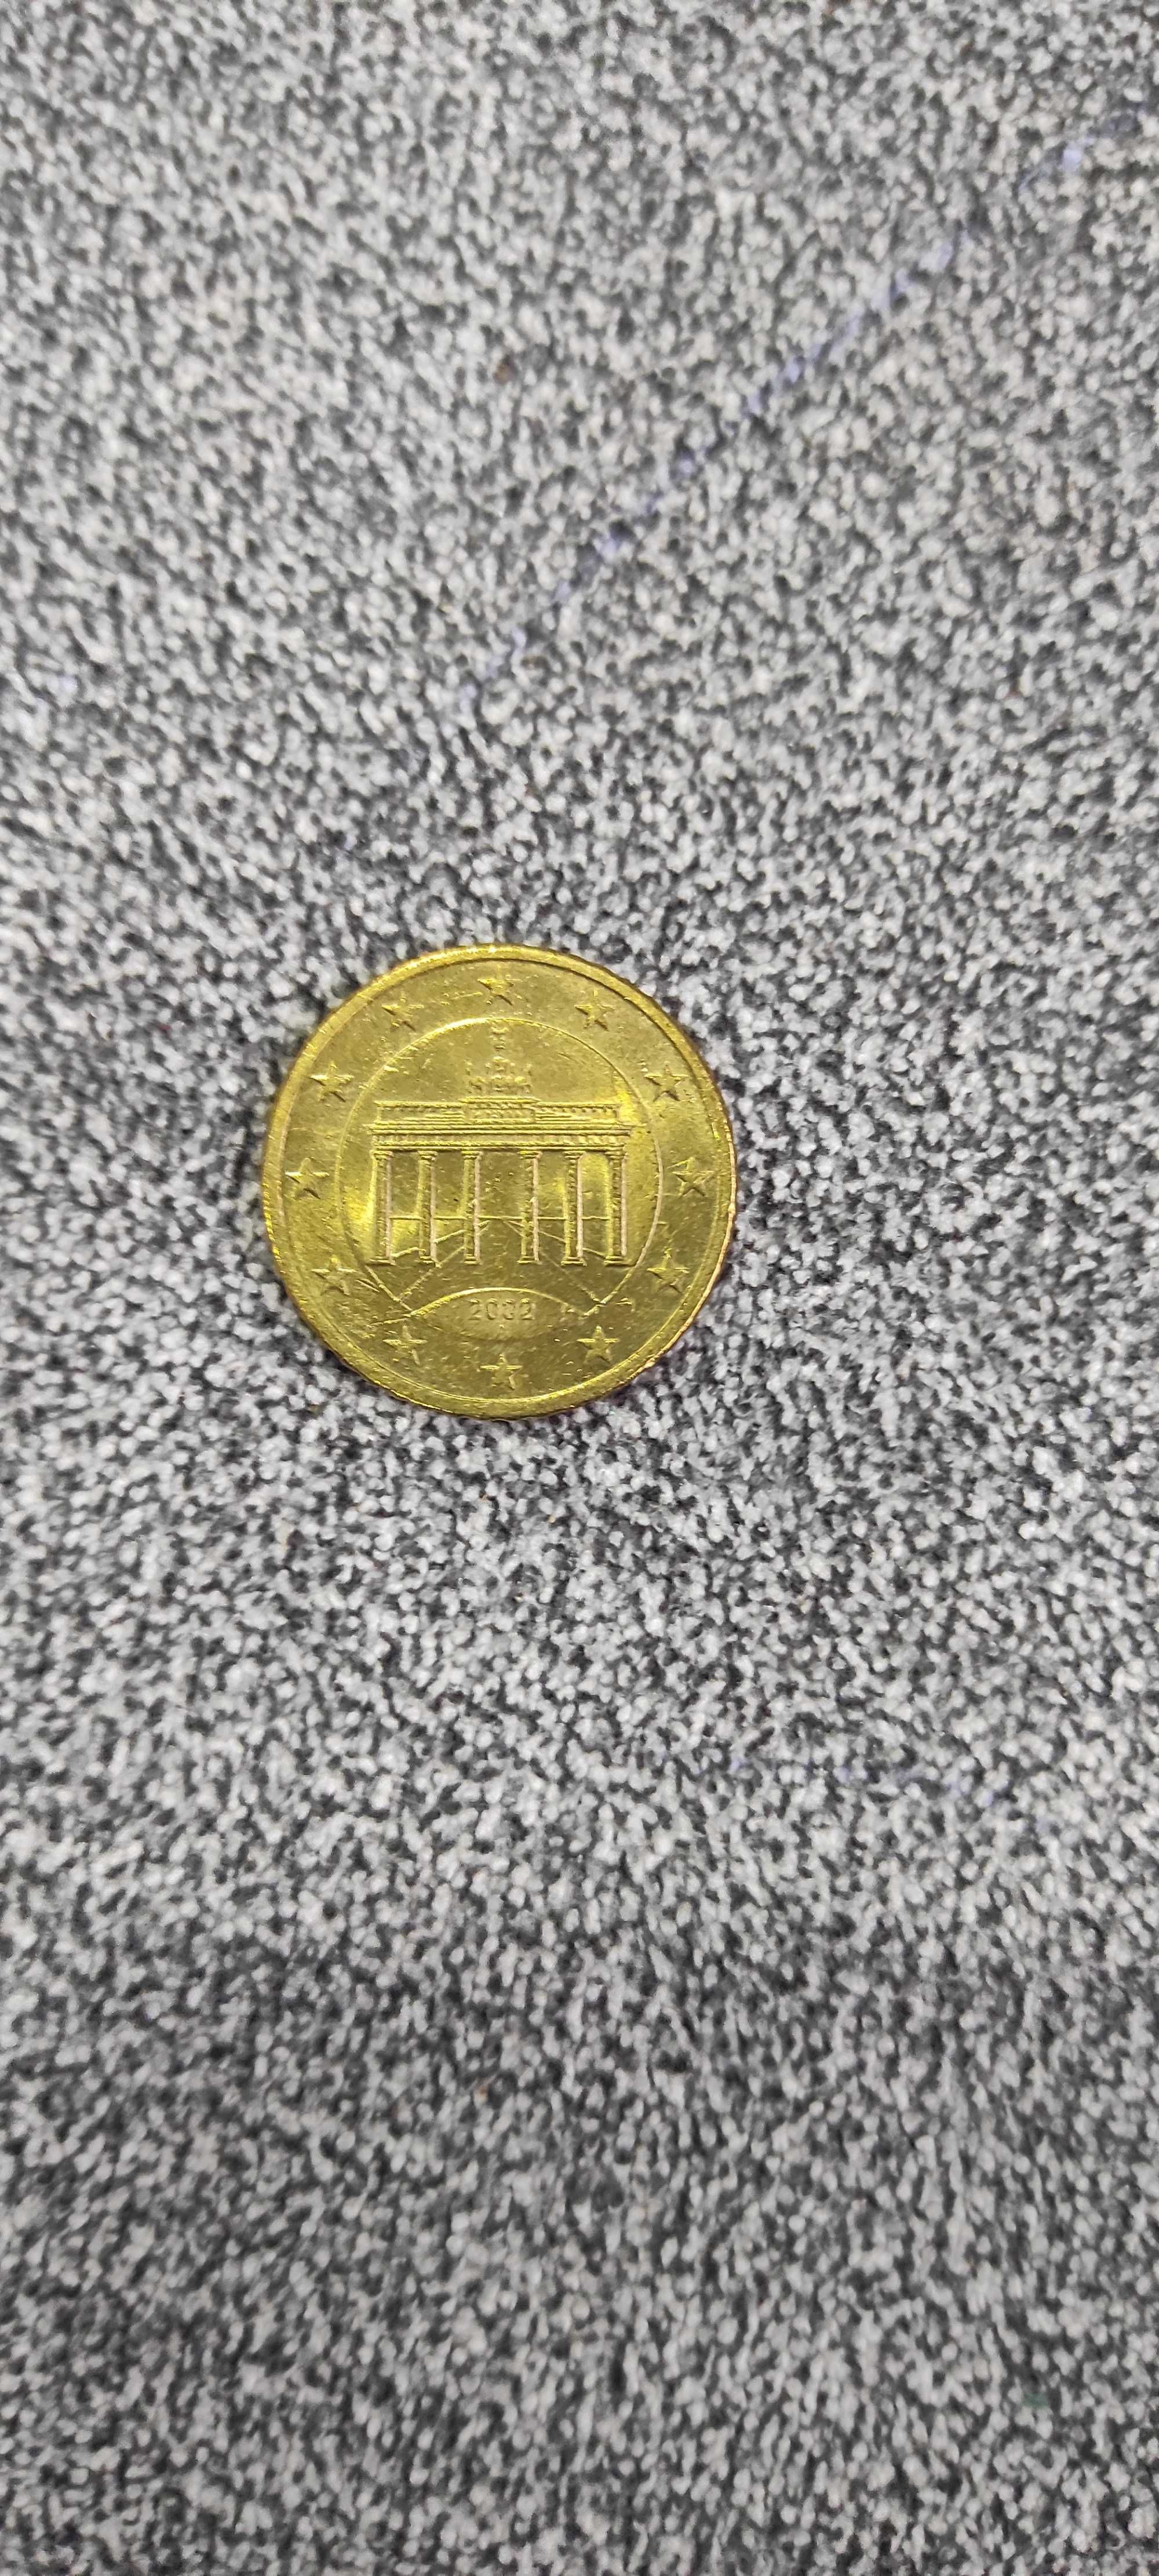 Vand monedă 50 cenți din 2002